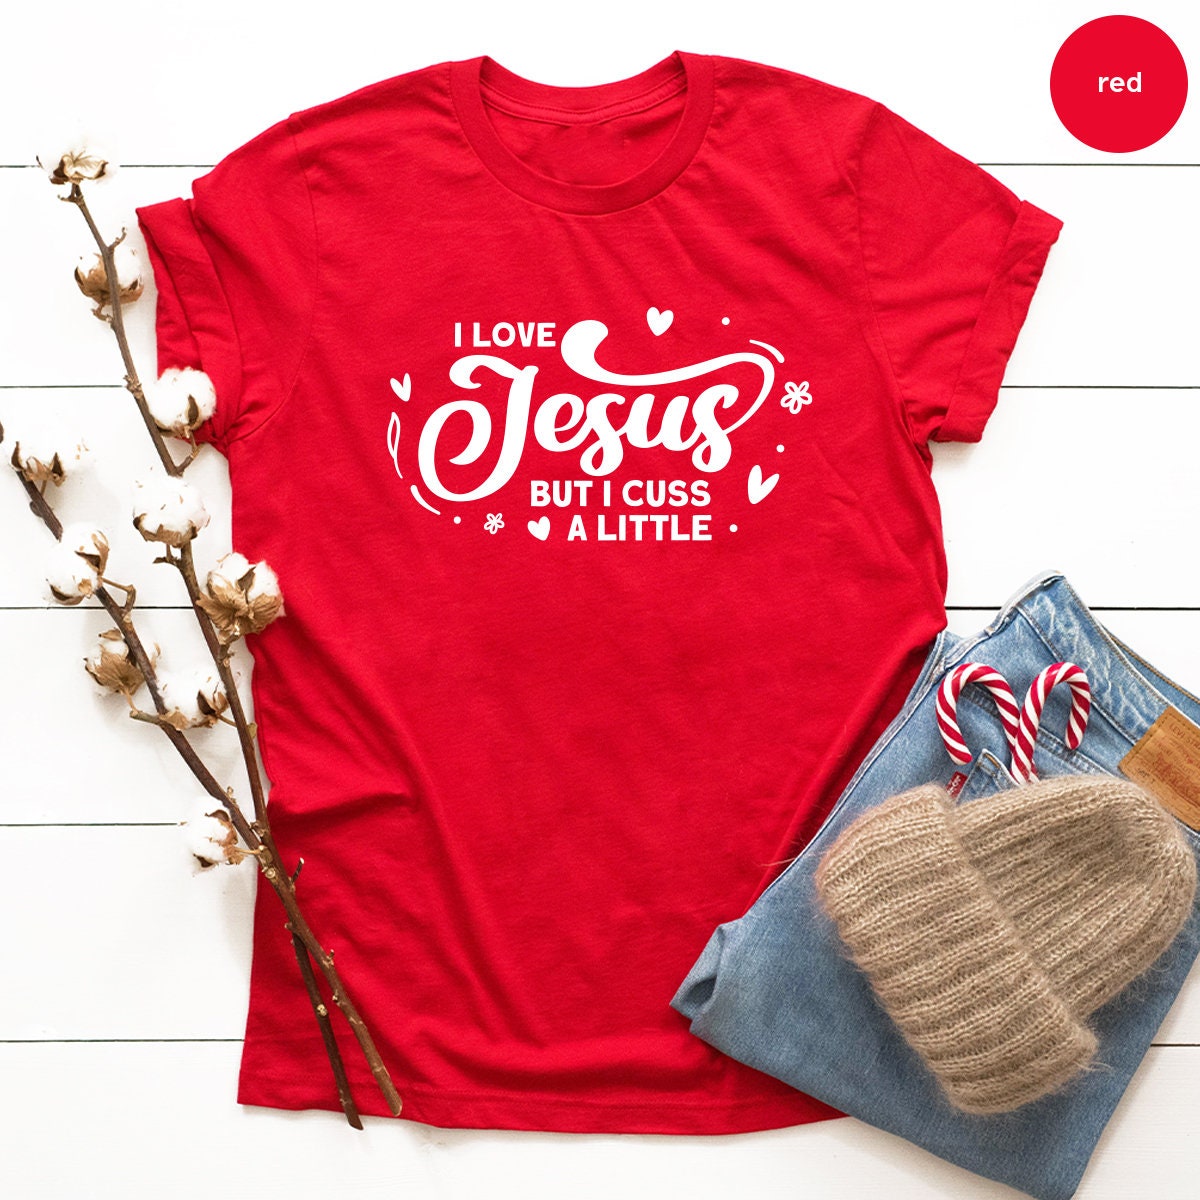 Faith T Shirt, Christian Shirt, Gift For Prayer, Religious Gifts, I Love Jesus But I Cuss A Little Shirt, Prayer Shirt, Church Shirts - Fastdeliverytees.com